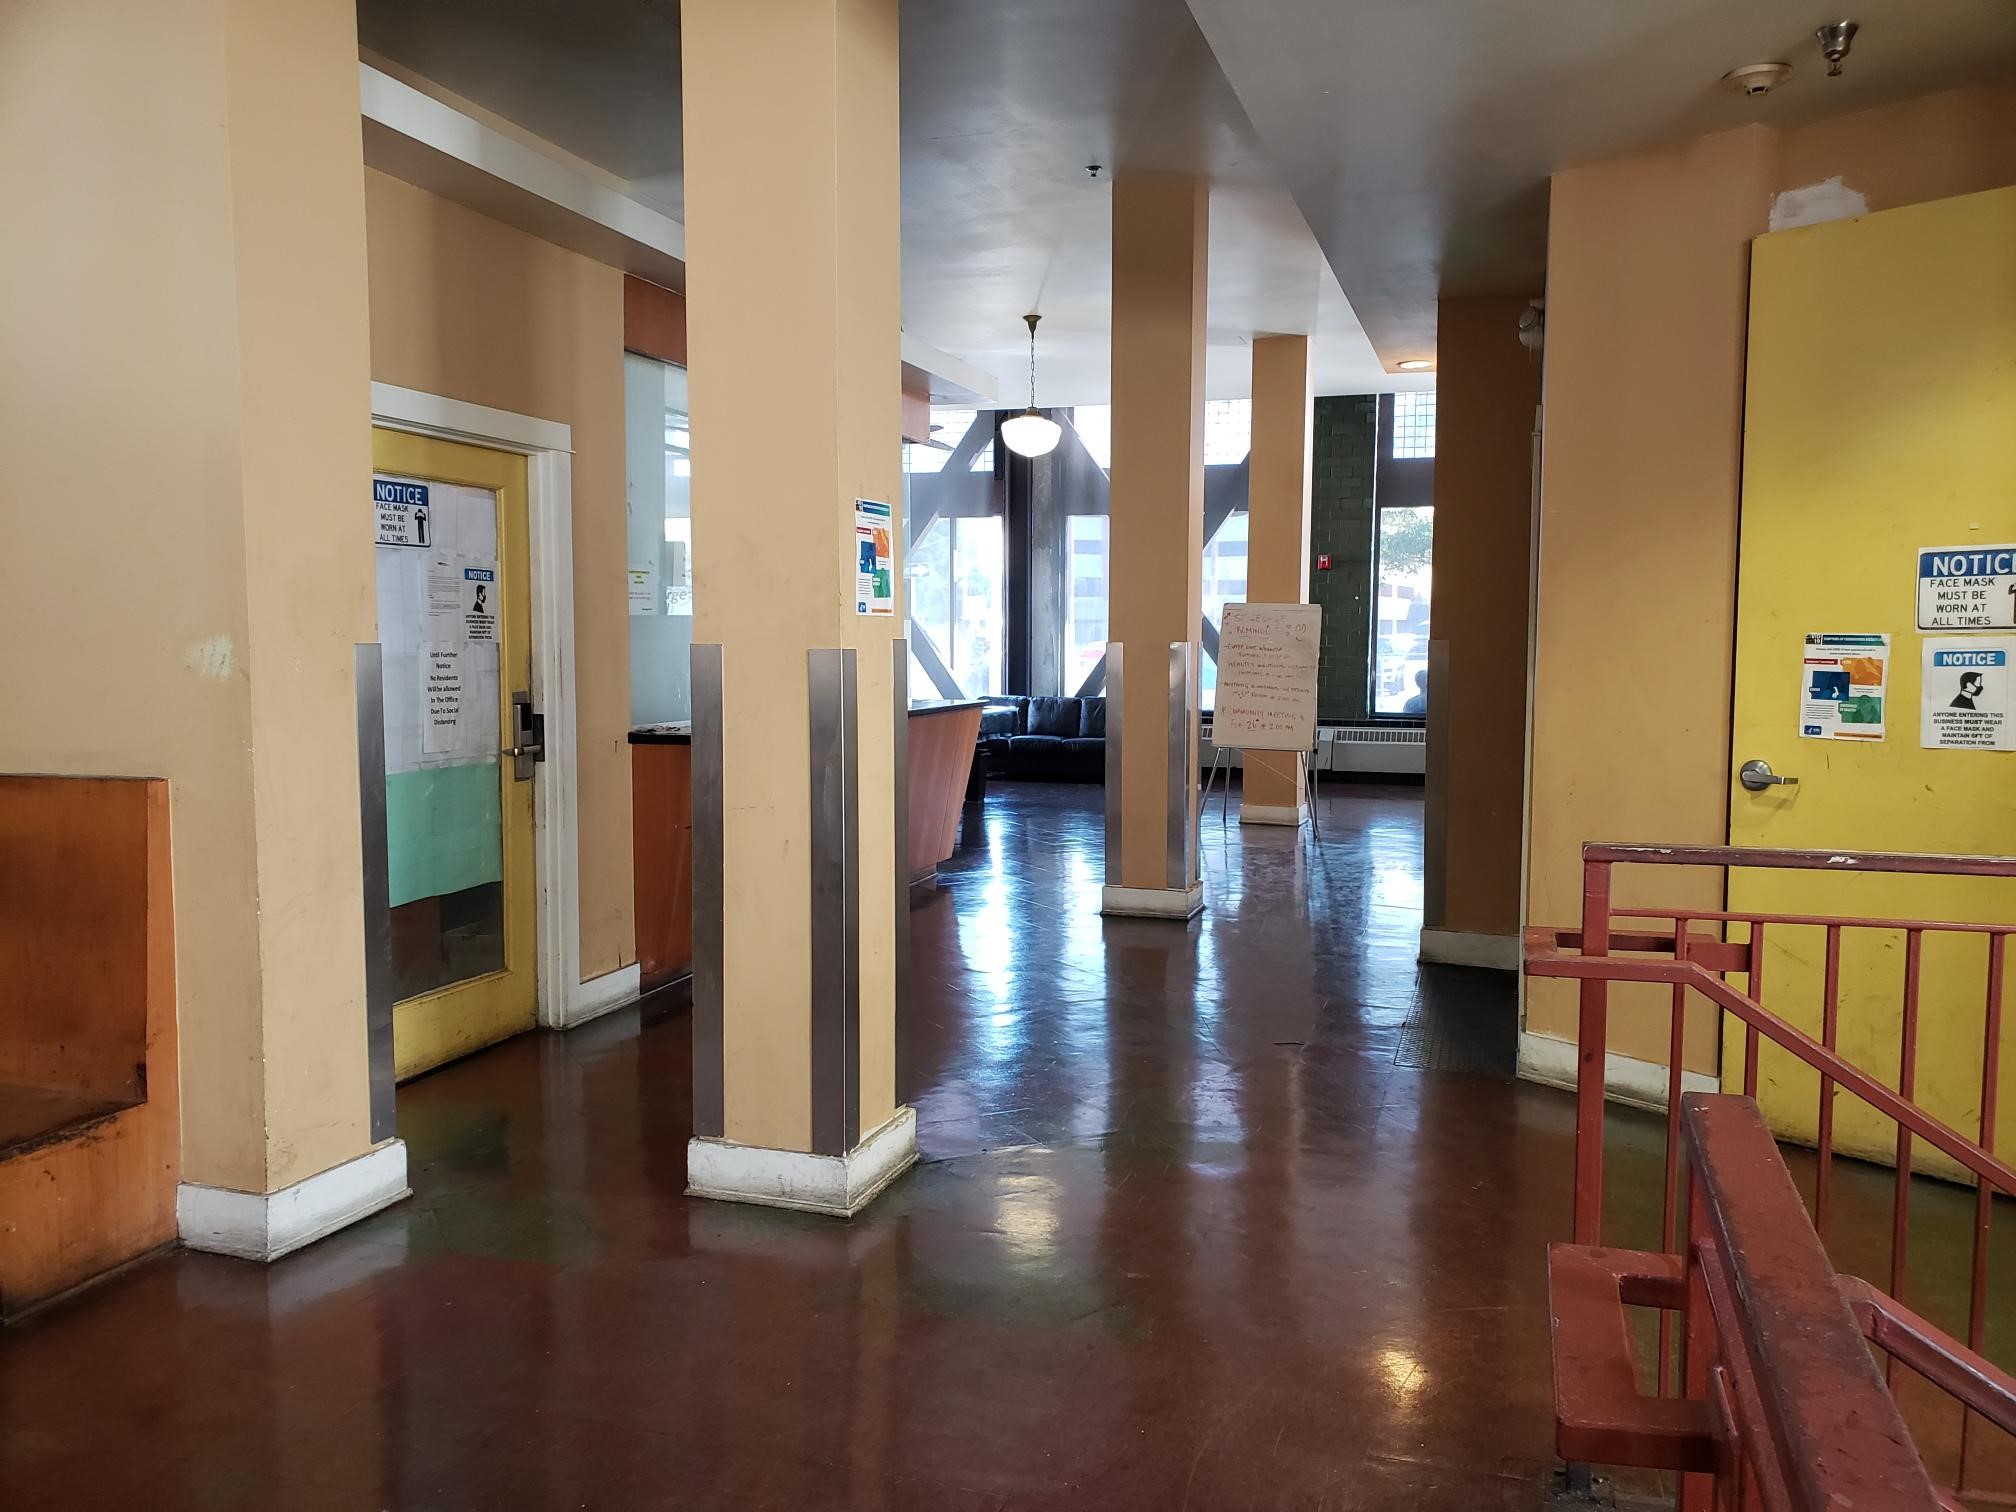 View of a lobby, burgundy floors, four yellow pillars.